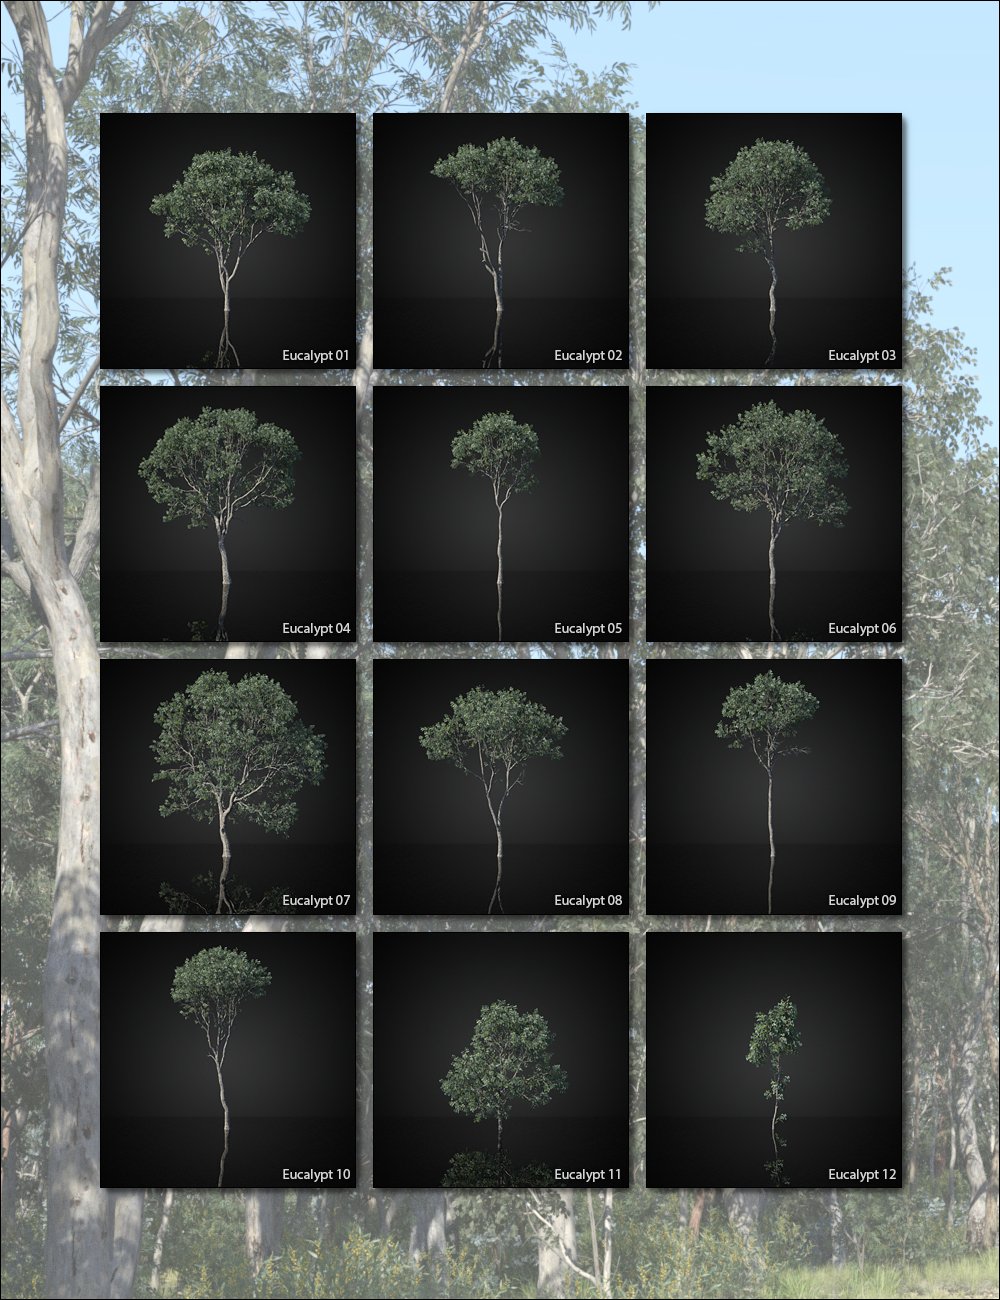 Australia Botanica - Trees and Shrubs by: HowieFarkes, 3D Models by Daz 3D